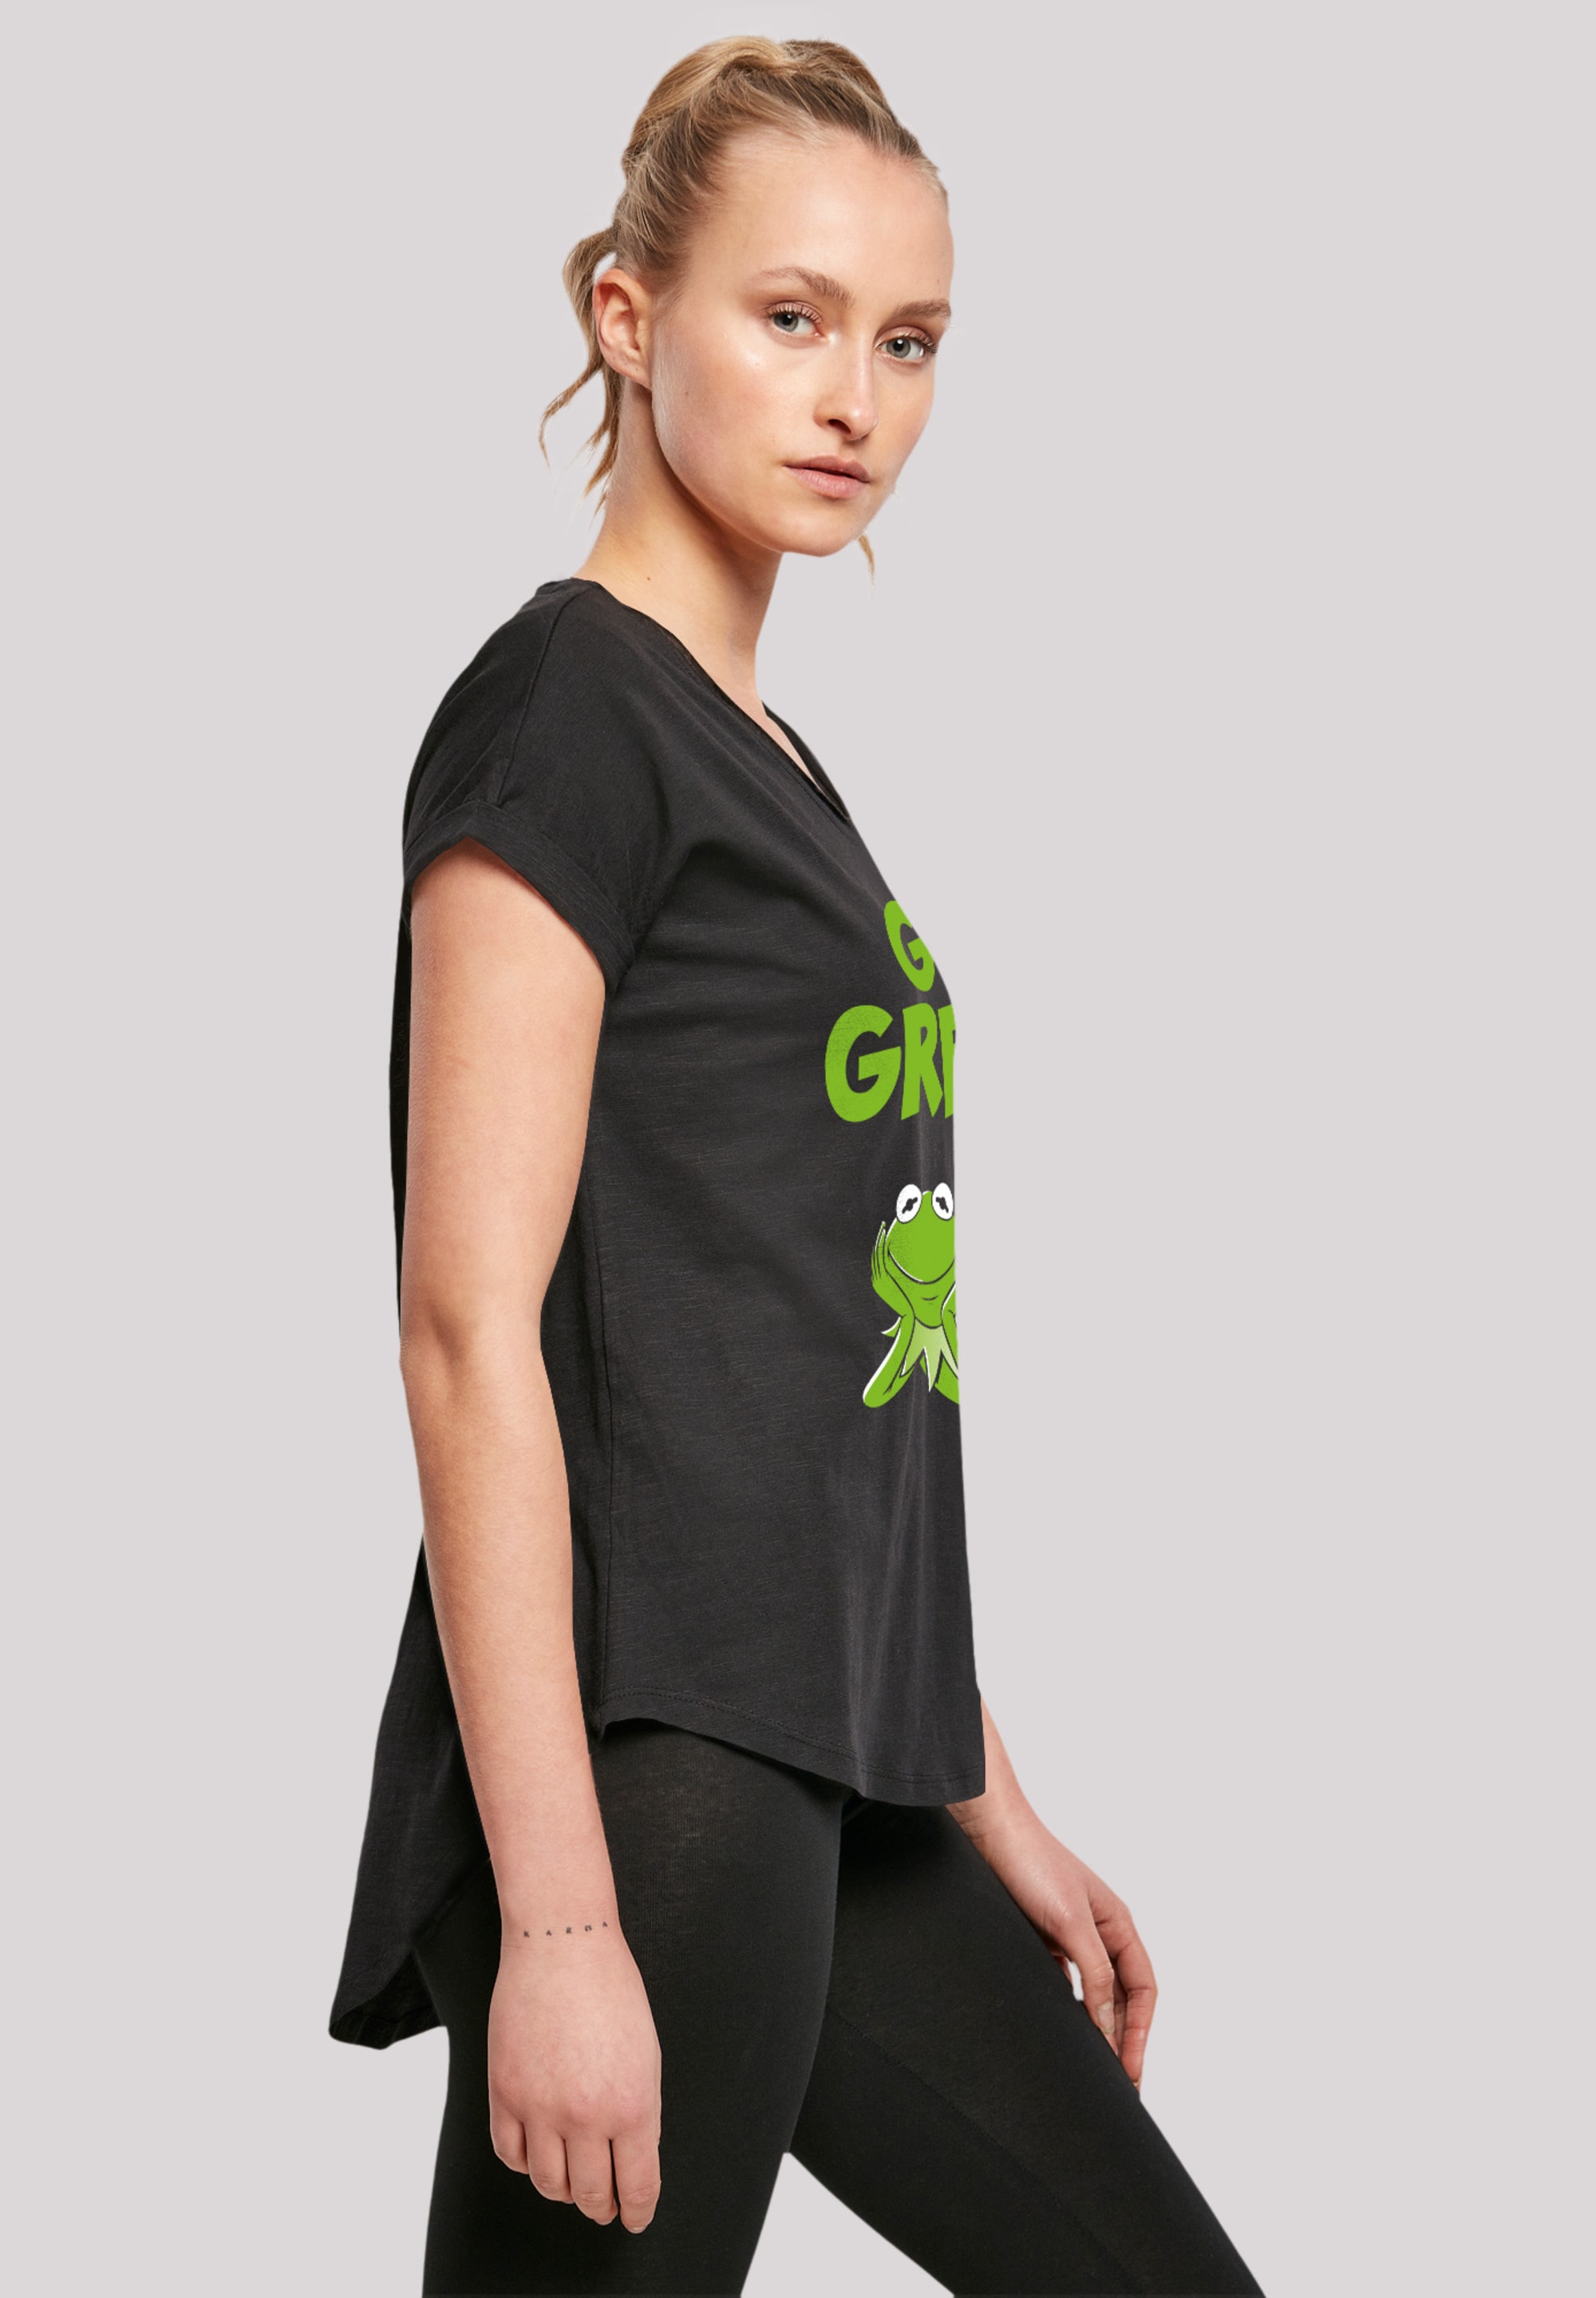 F4NT4STIC T-Shirt »Disney Muppets Go Green«, Premium Qualität | I'm walking